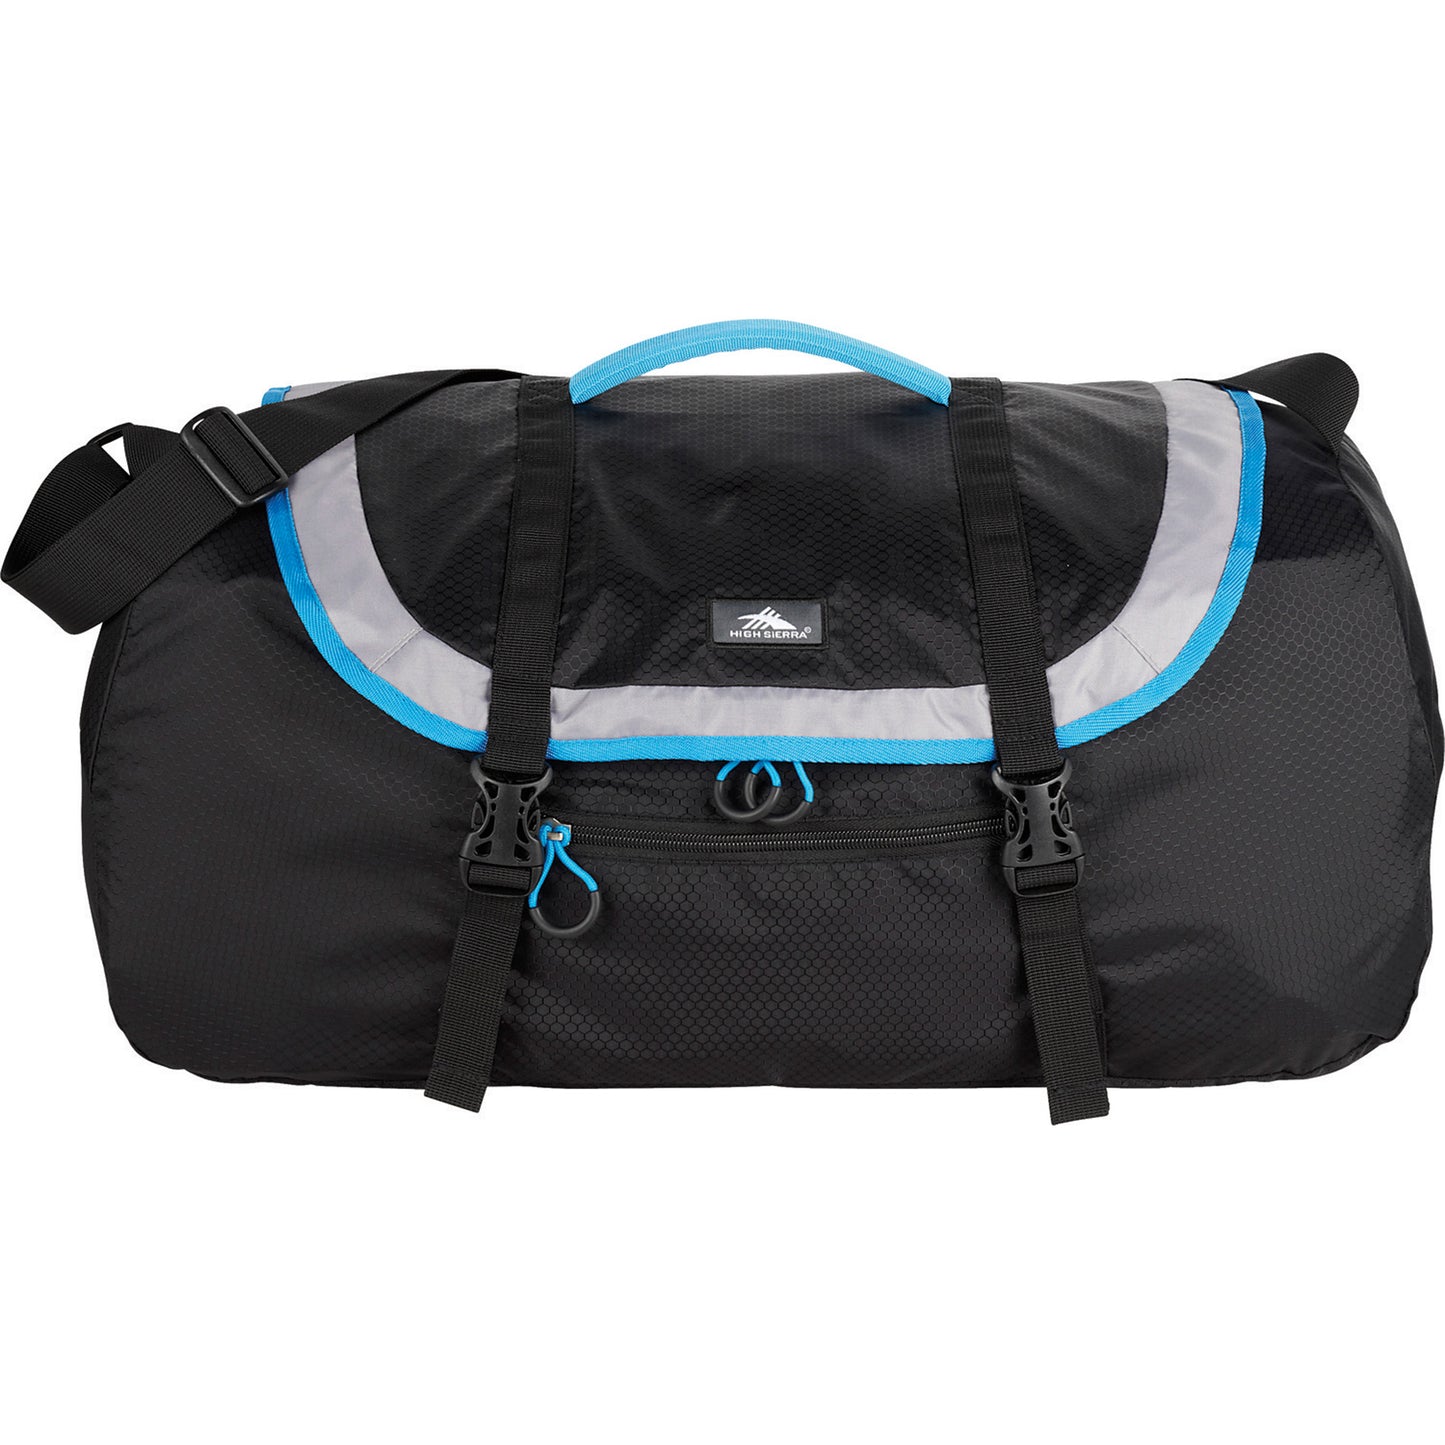 High Sierra® 40L Pack-n-Go 23” Duffel Bag